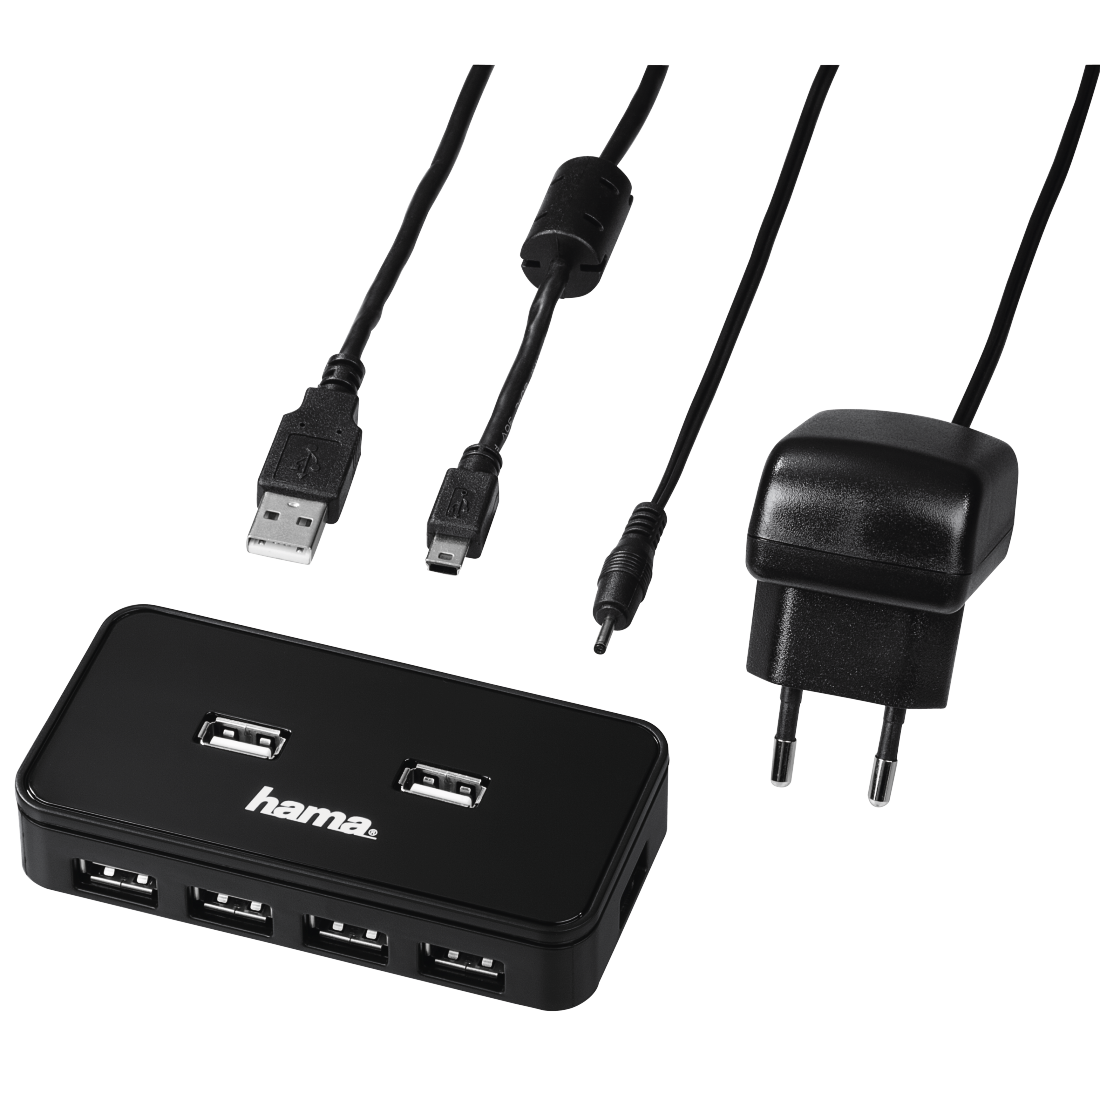 00039859 Hama USB 2.0 Hub 1:7, with power supply, black, cardboard box |  hama.com